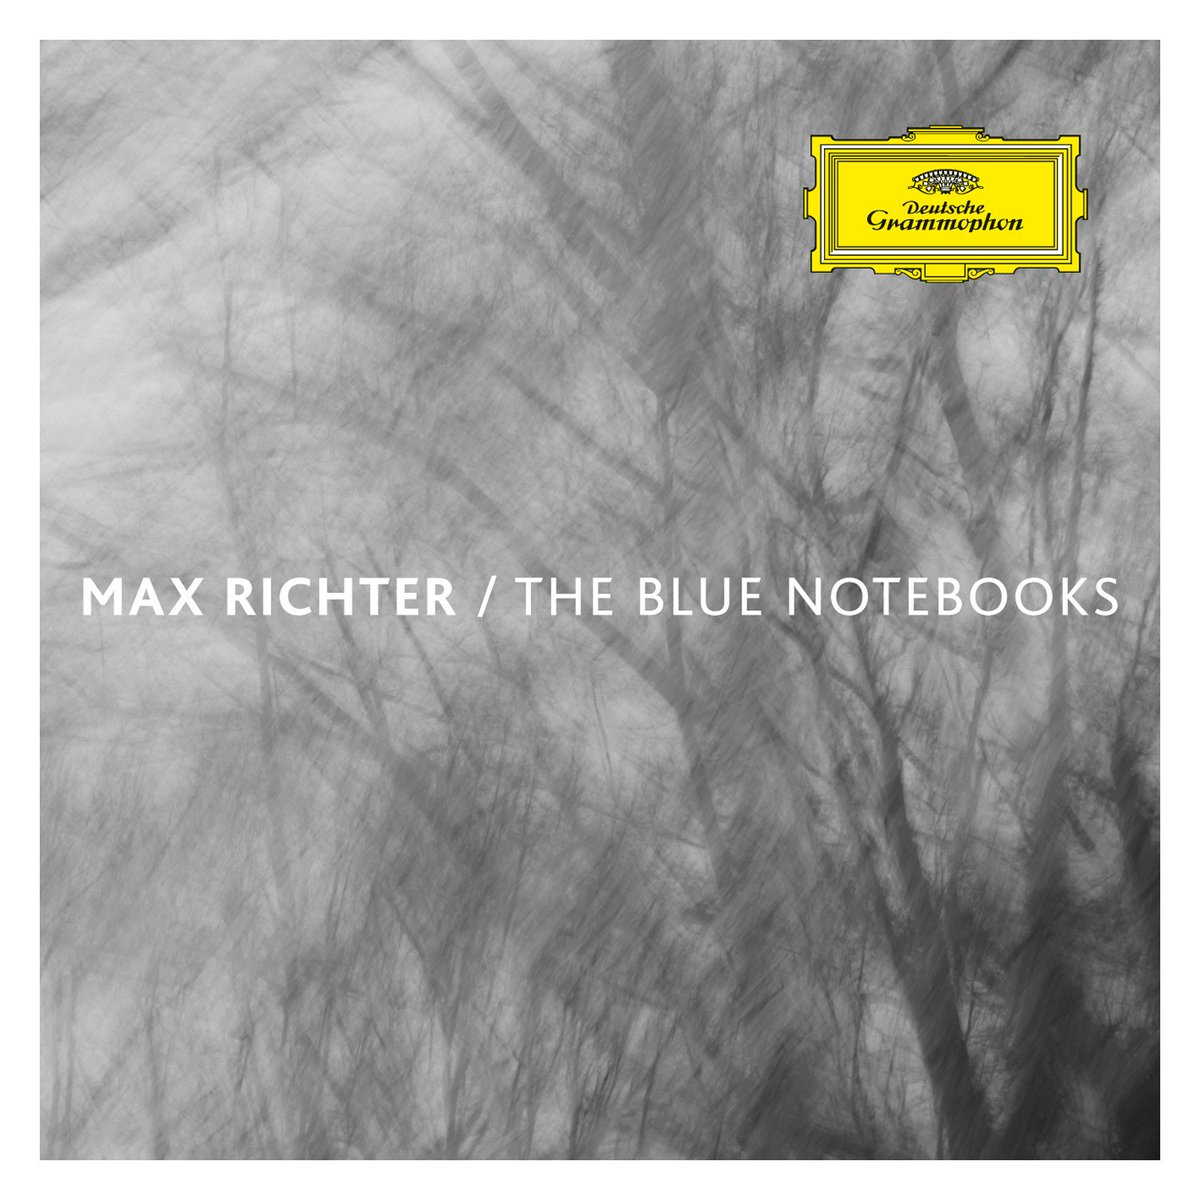 Max Richter - The Blue Notebooks (00289 479 4185 GH)